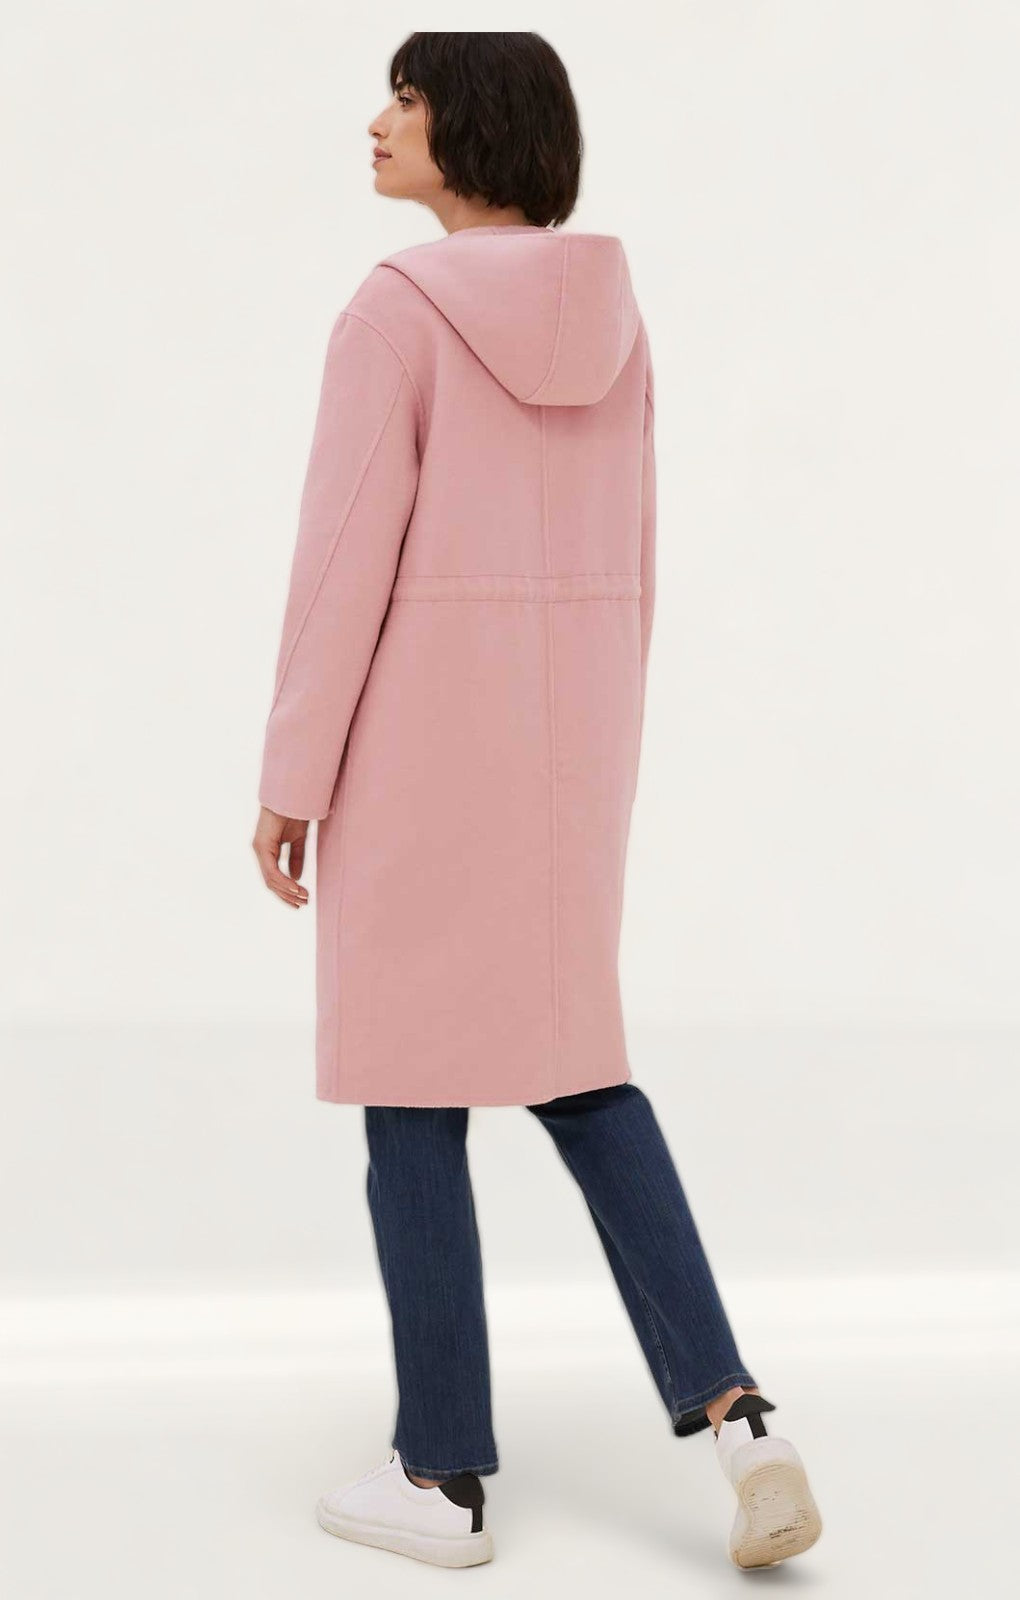 M&S Pink Wool Blend Drawstring Parka product image